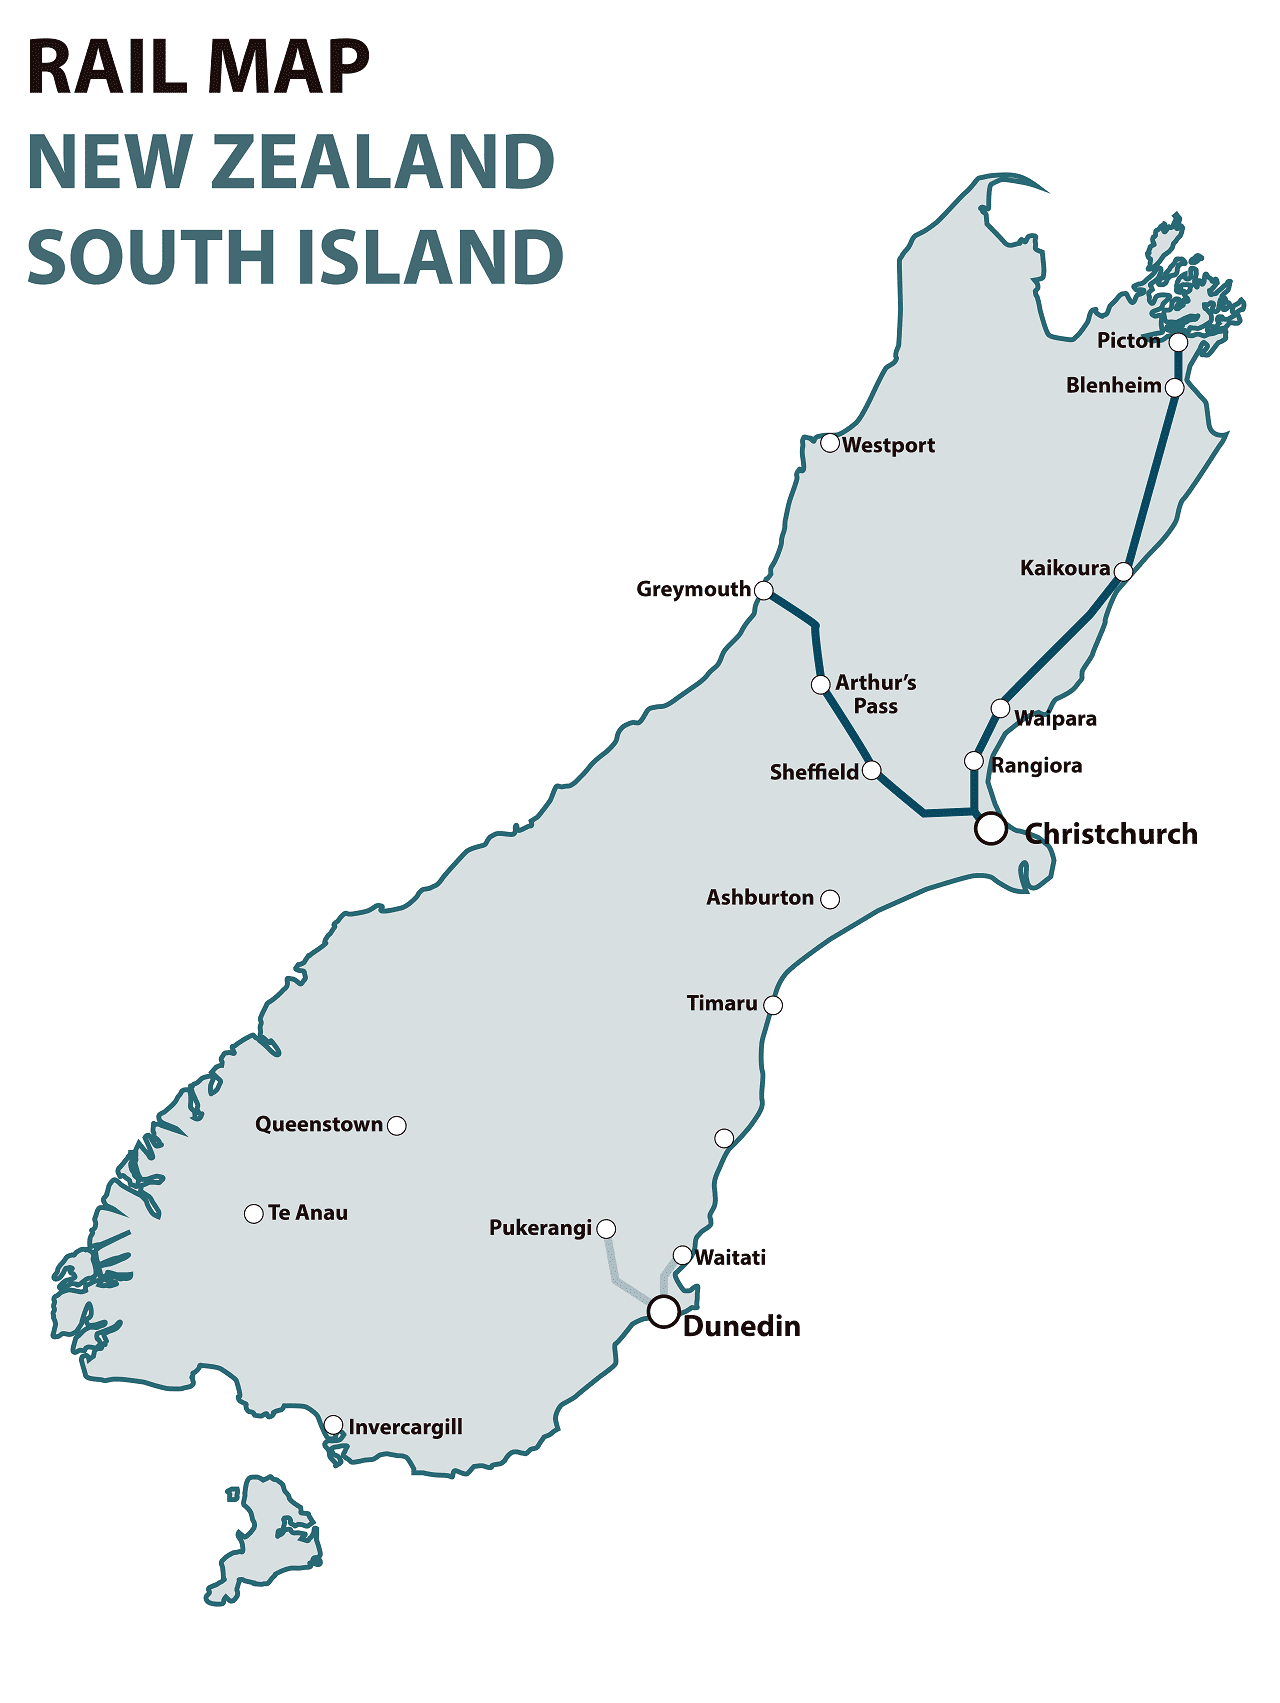 New Zealand south island rail map